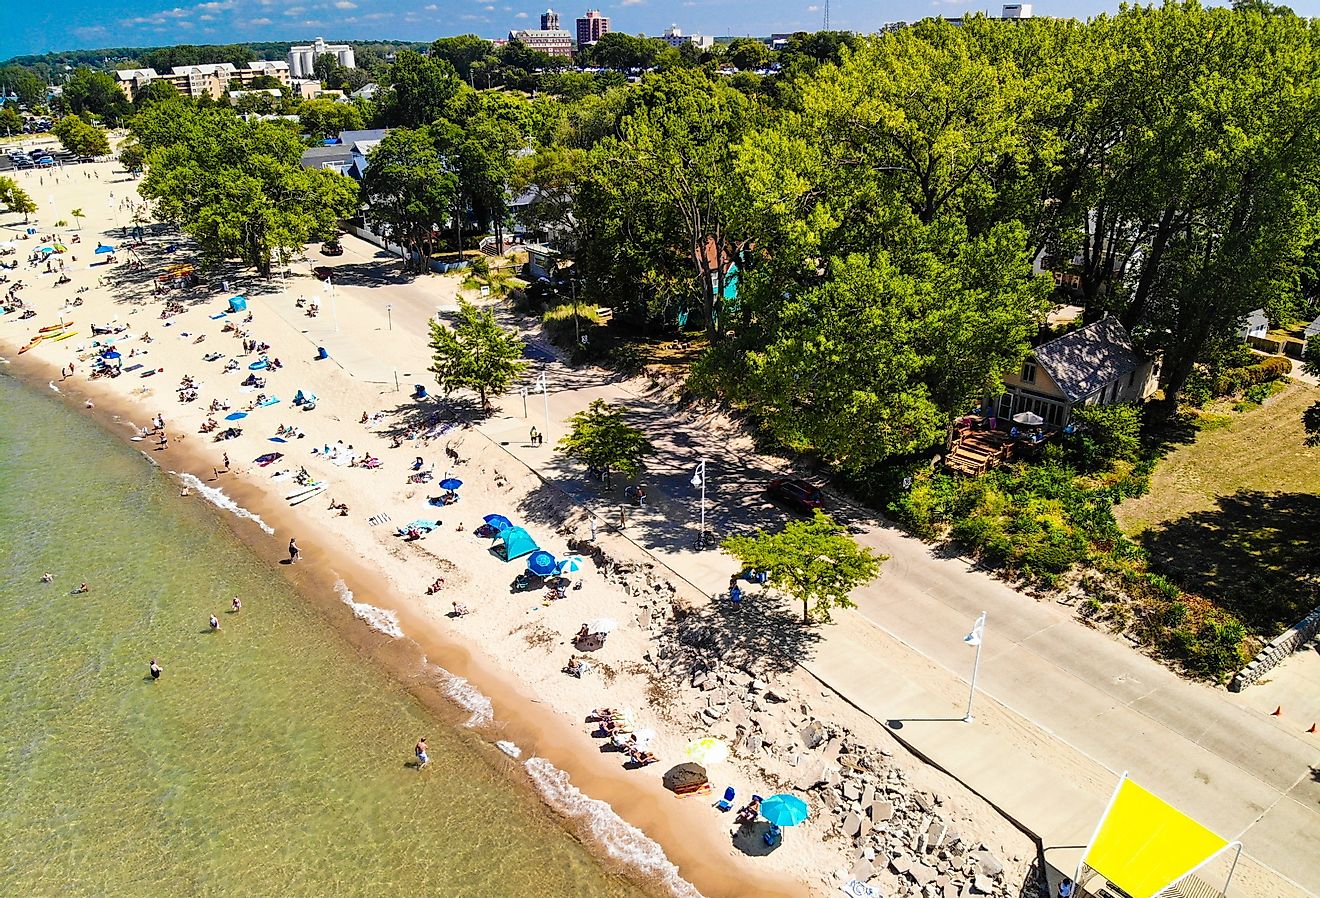 Beautiful drone shot of the great beach town of St Joseph Michigan. Image credit SkyCam Video LLC via Shutterstock